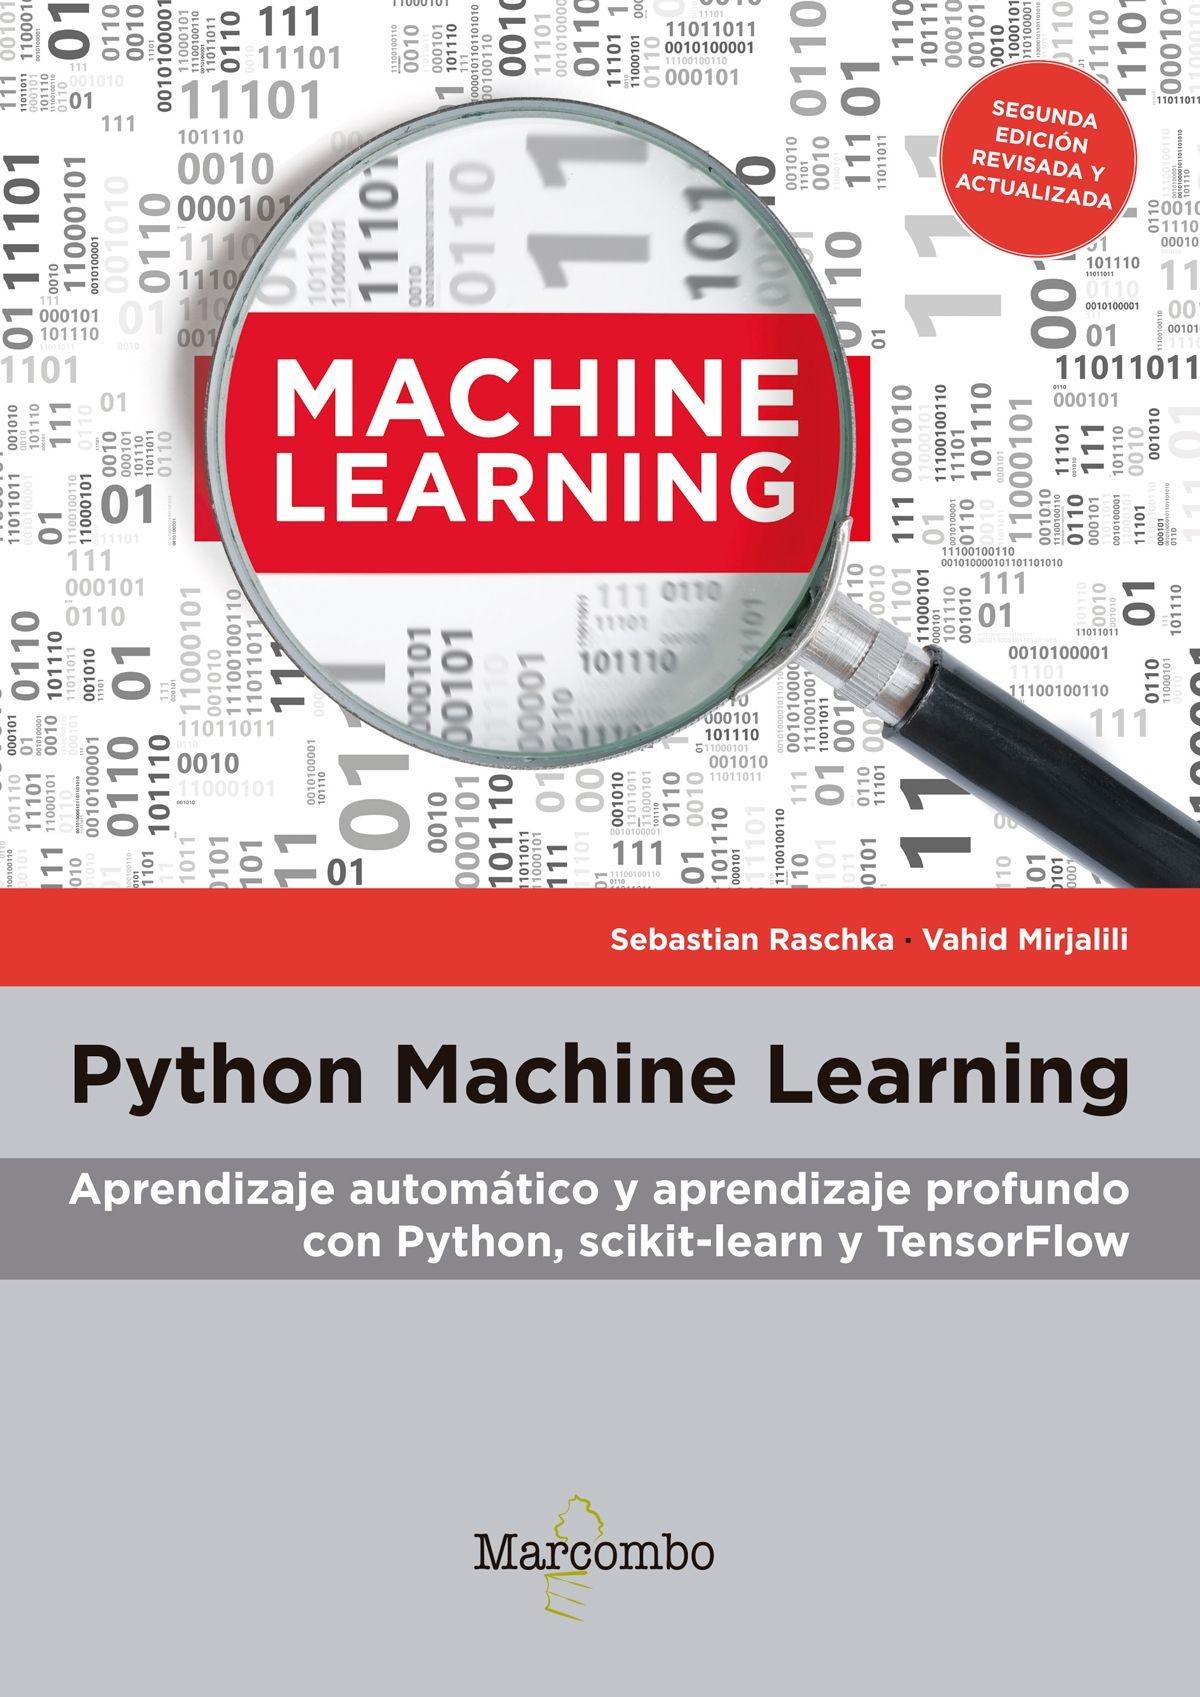 Python Machine Learning "Aprendizaje automático y aprendizaje profundo con Python, scikit-learn y TensorFlow"